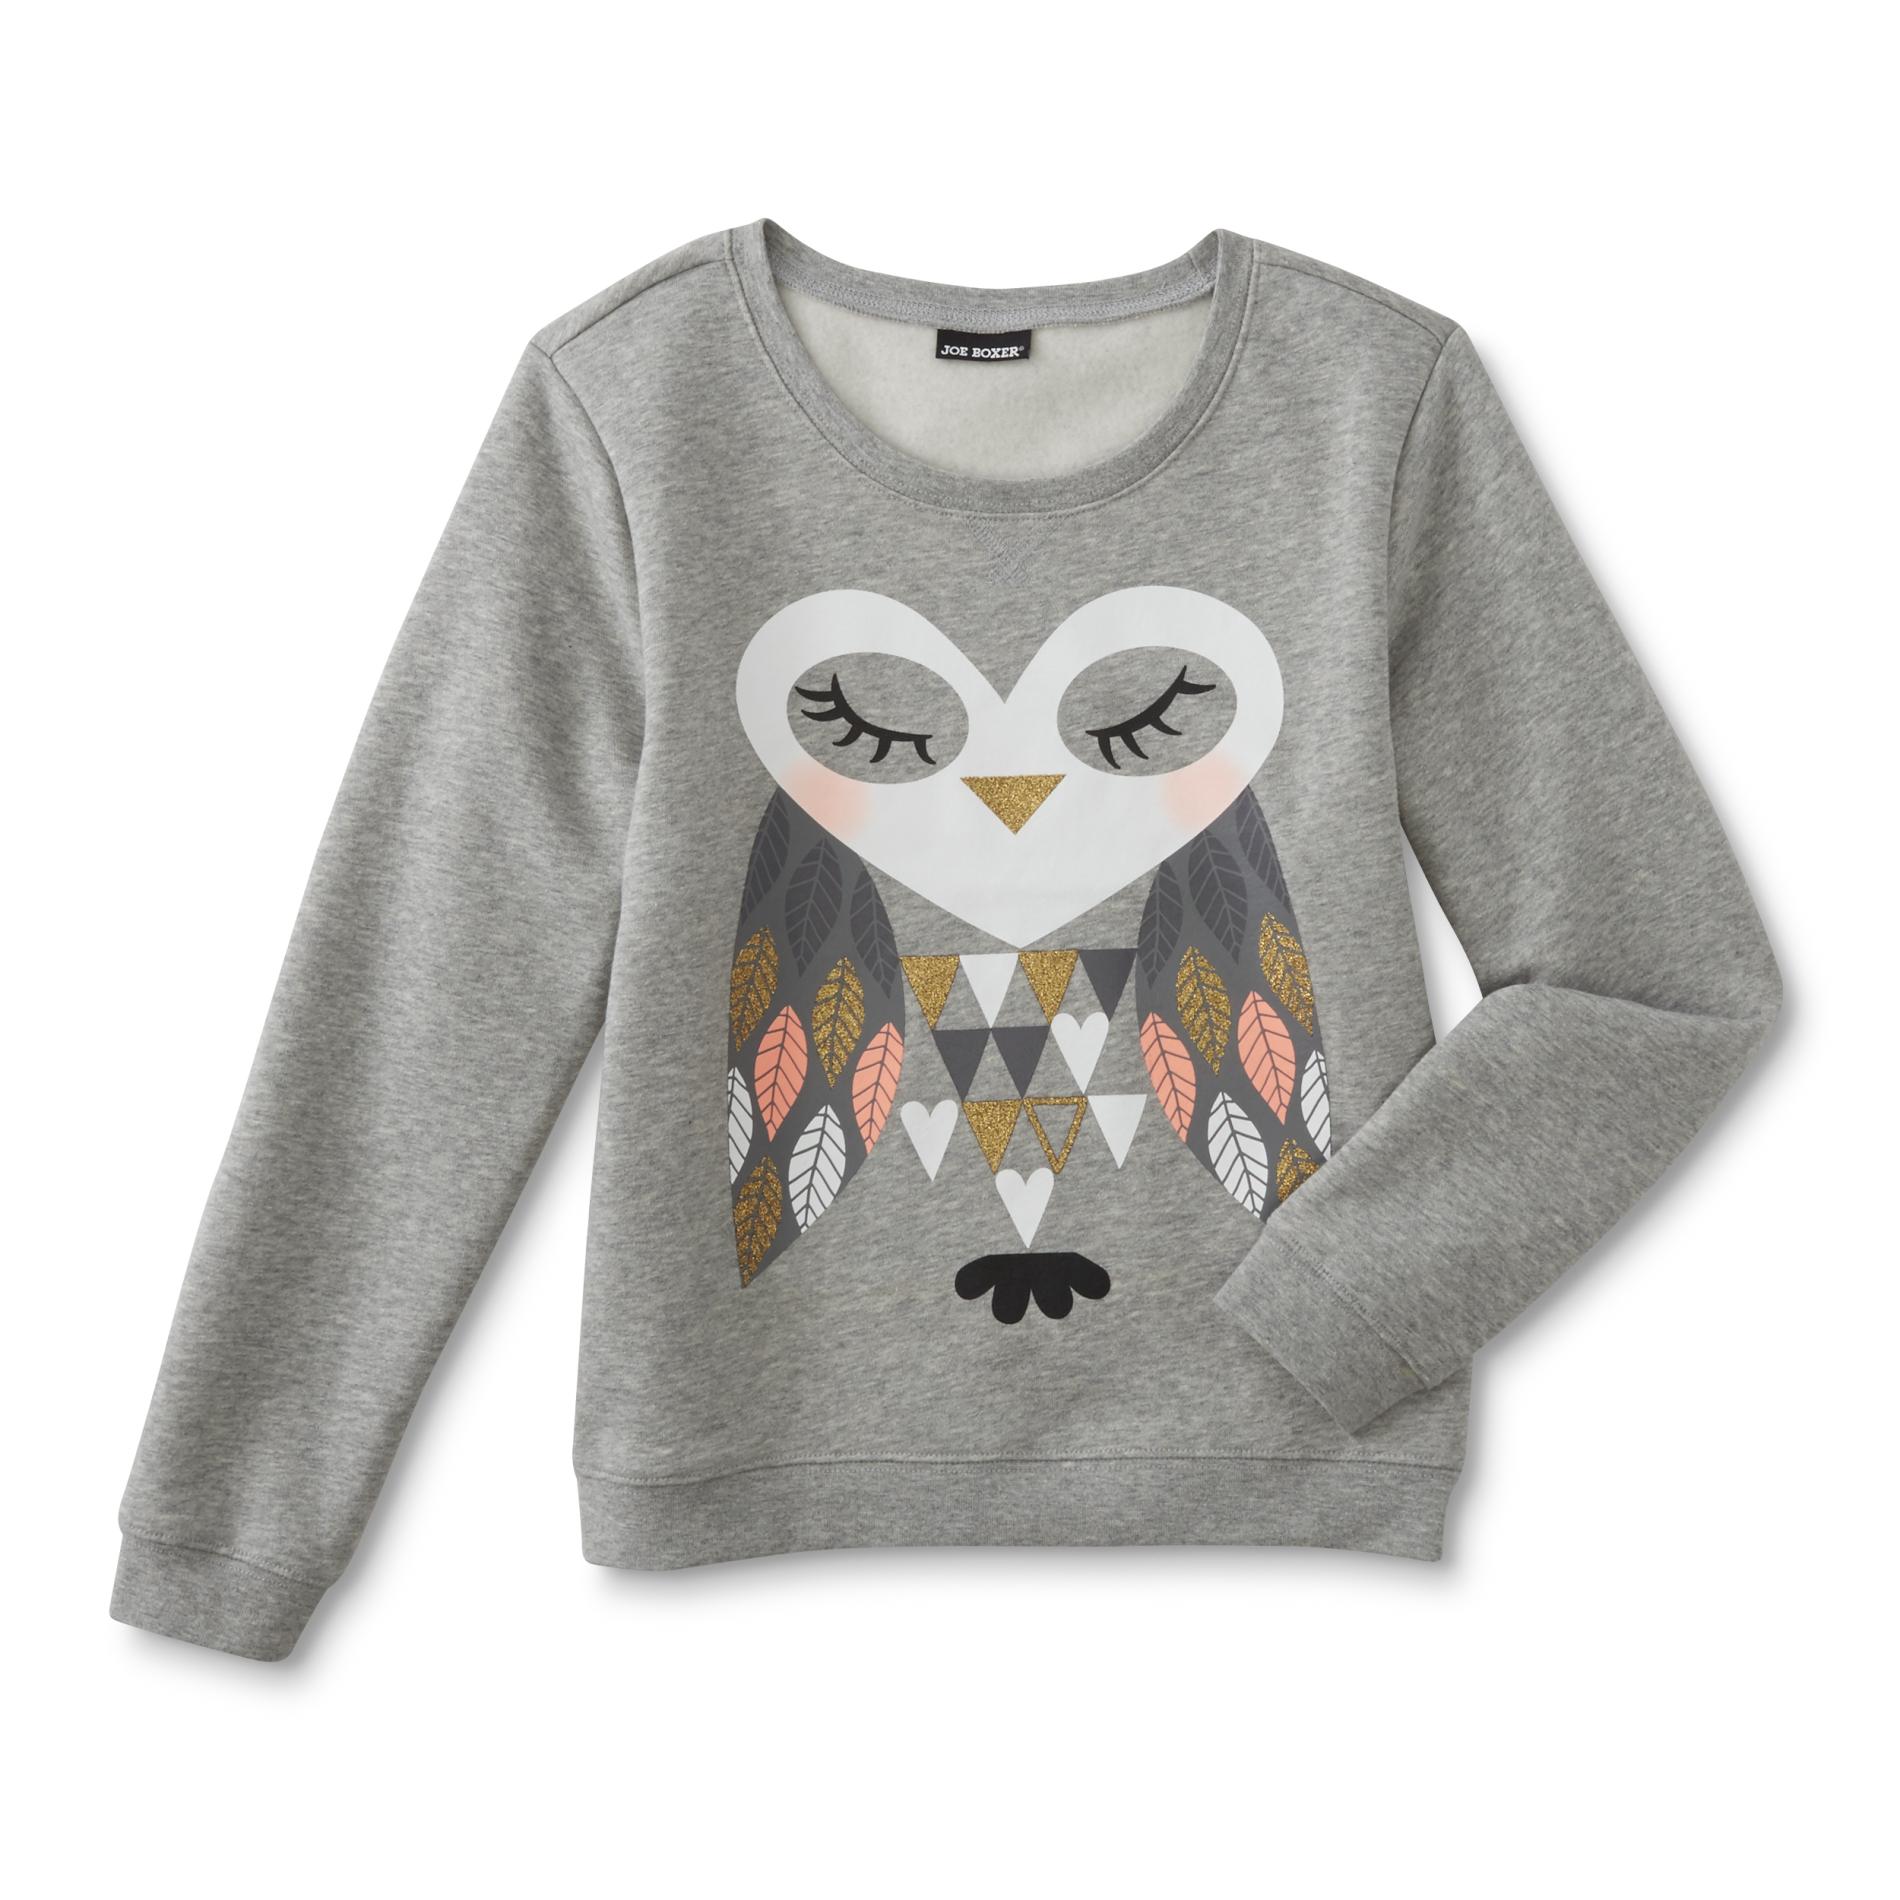 Joe Boxer Girl's Graphic Sweater - Owl